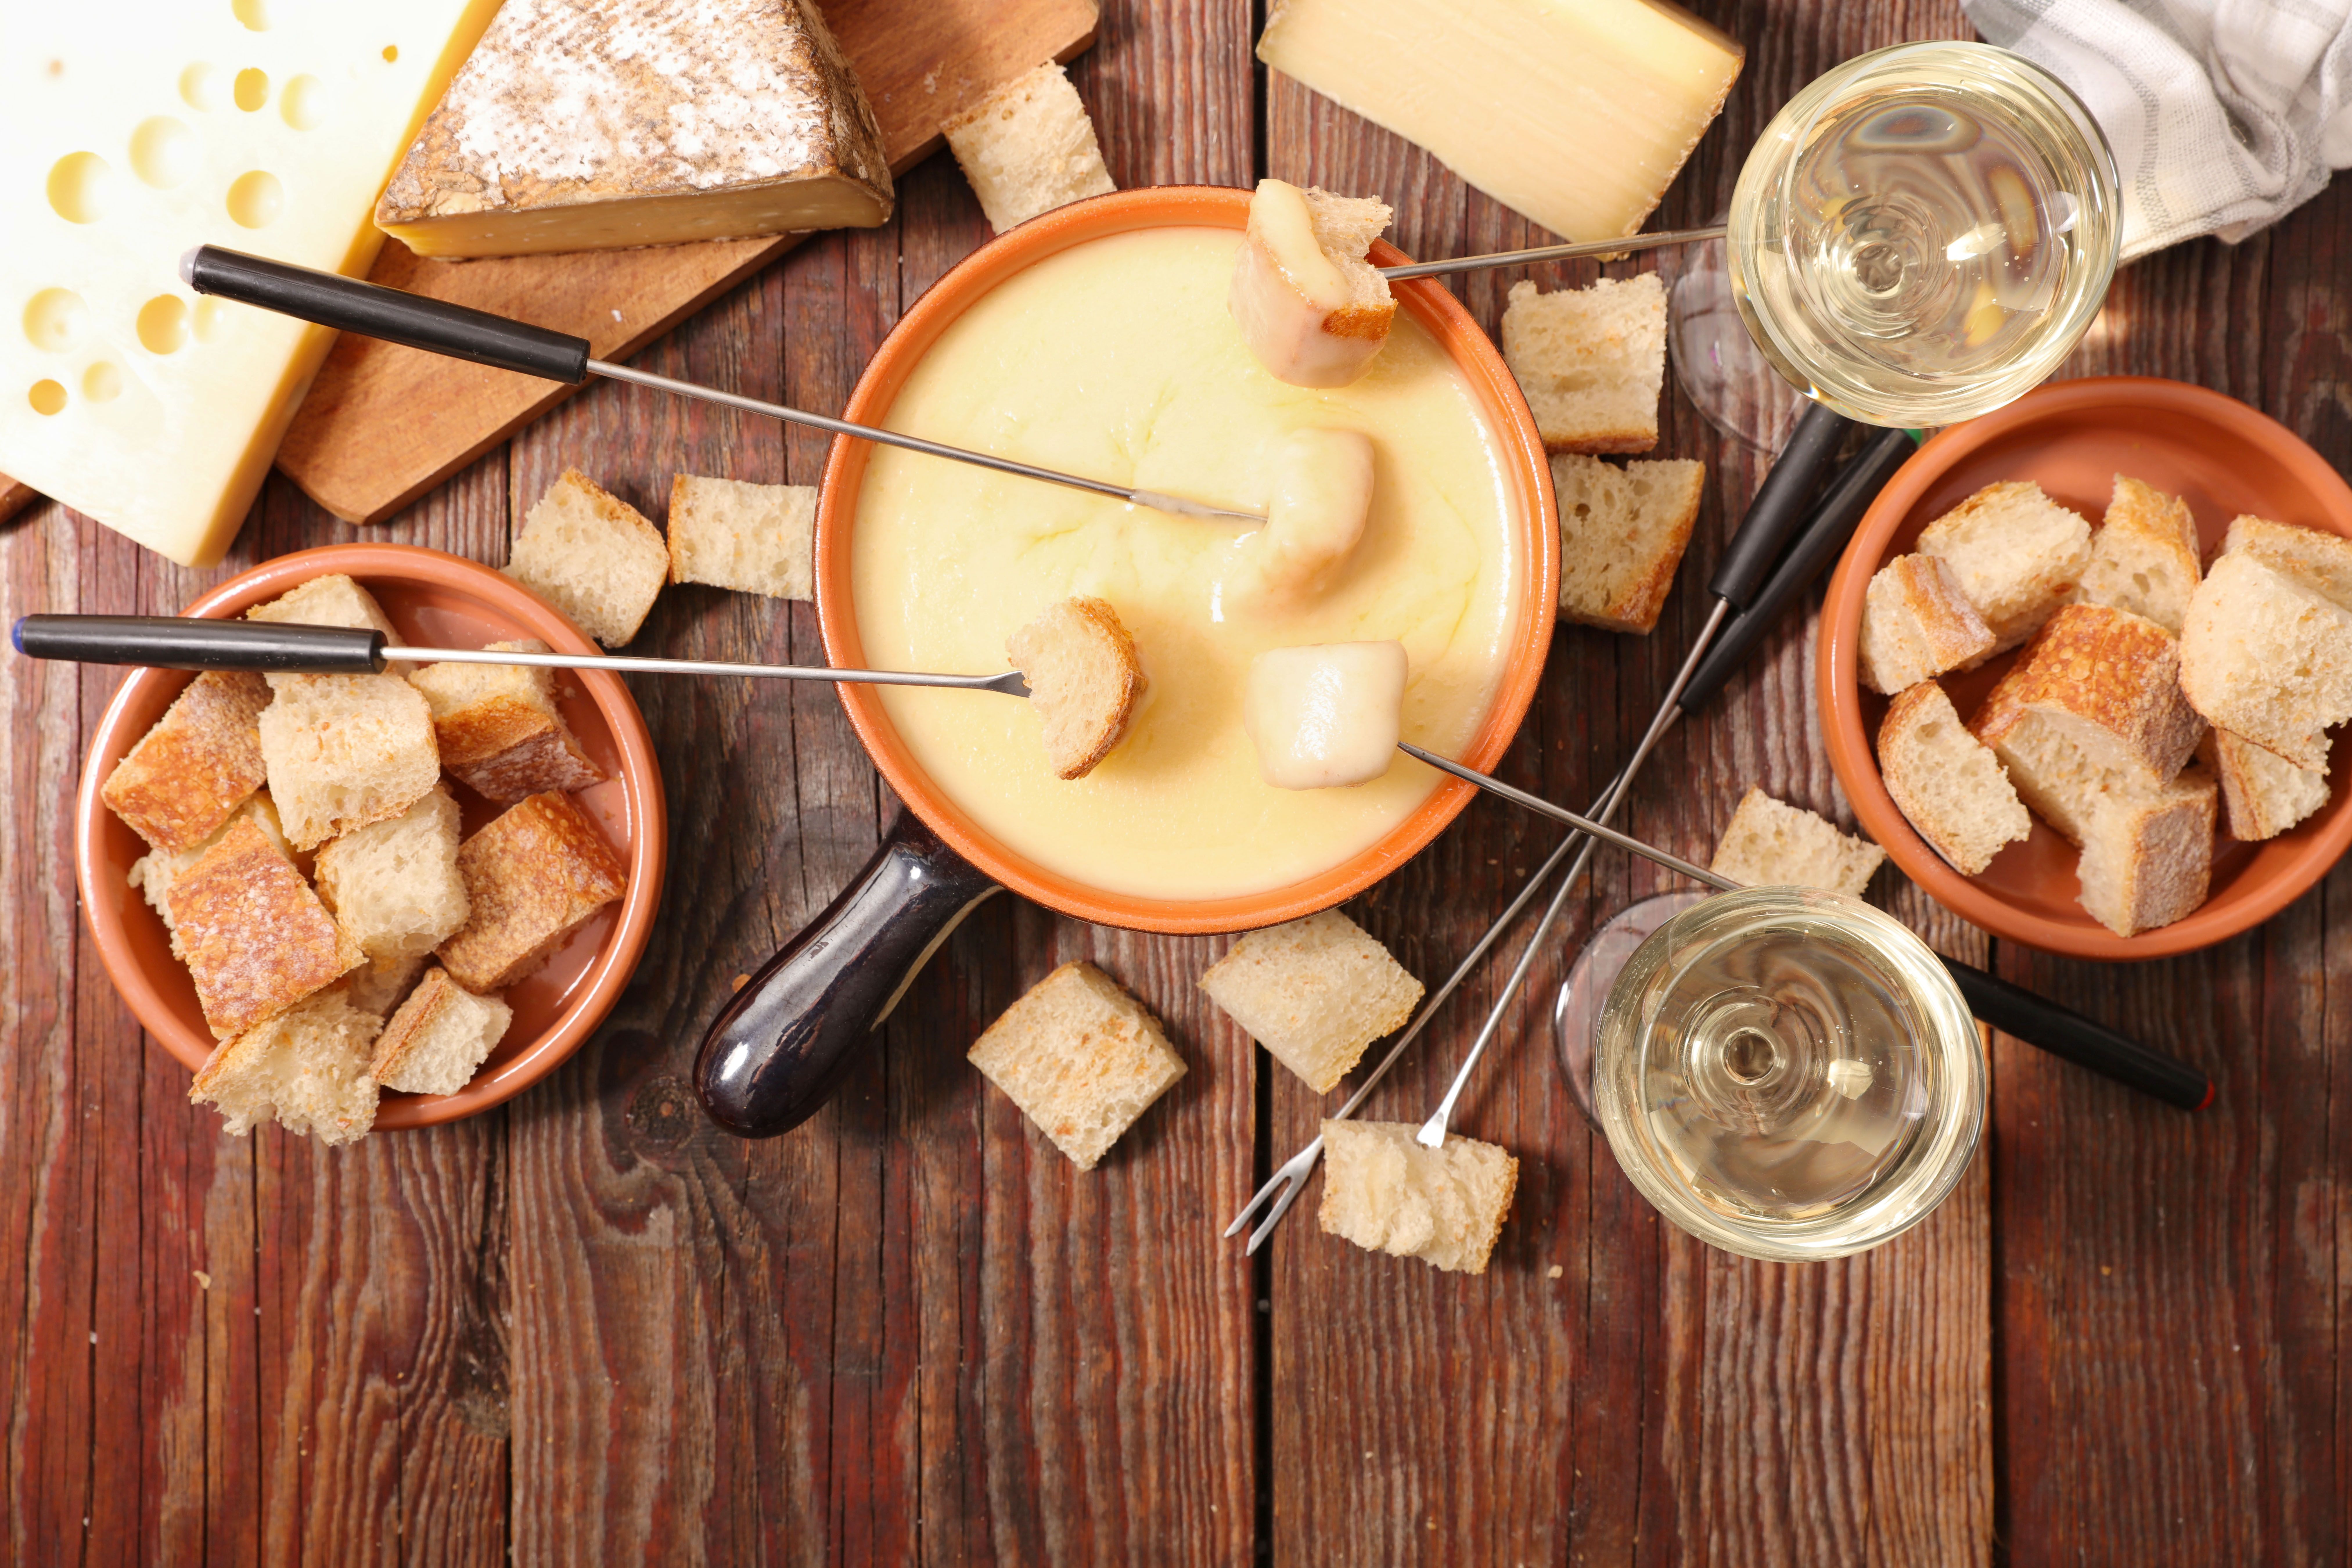 Classic Cheese Fondue Recipe